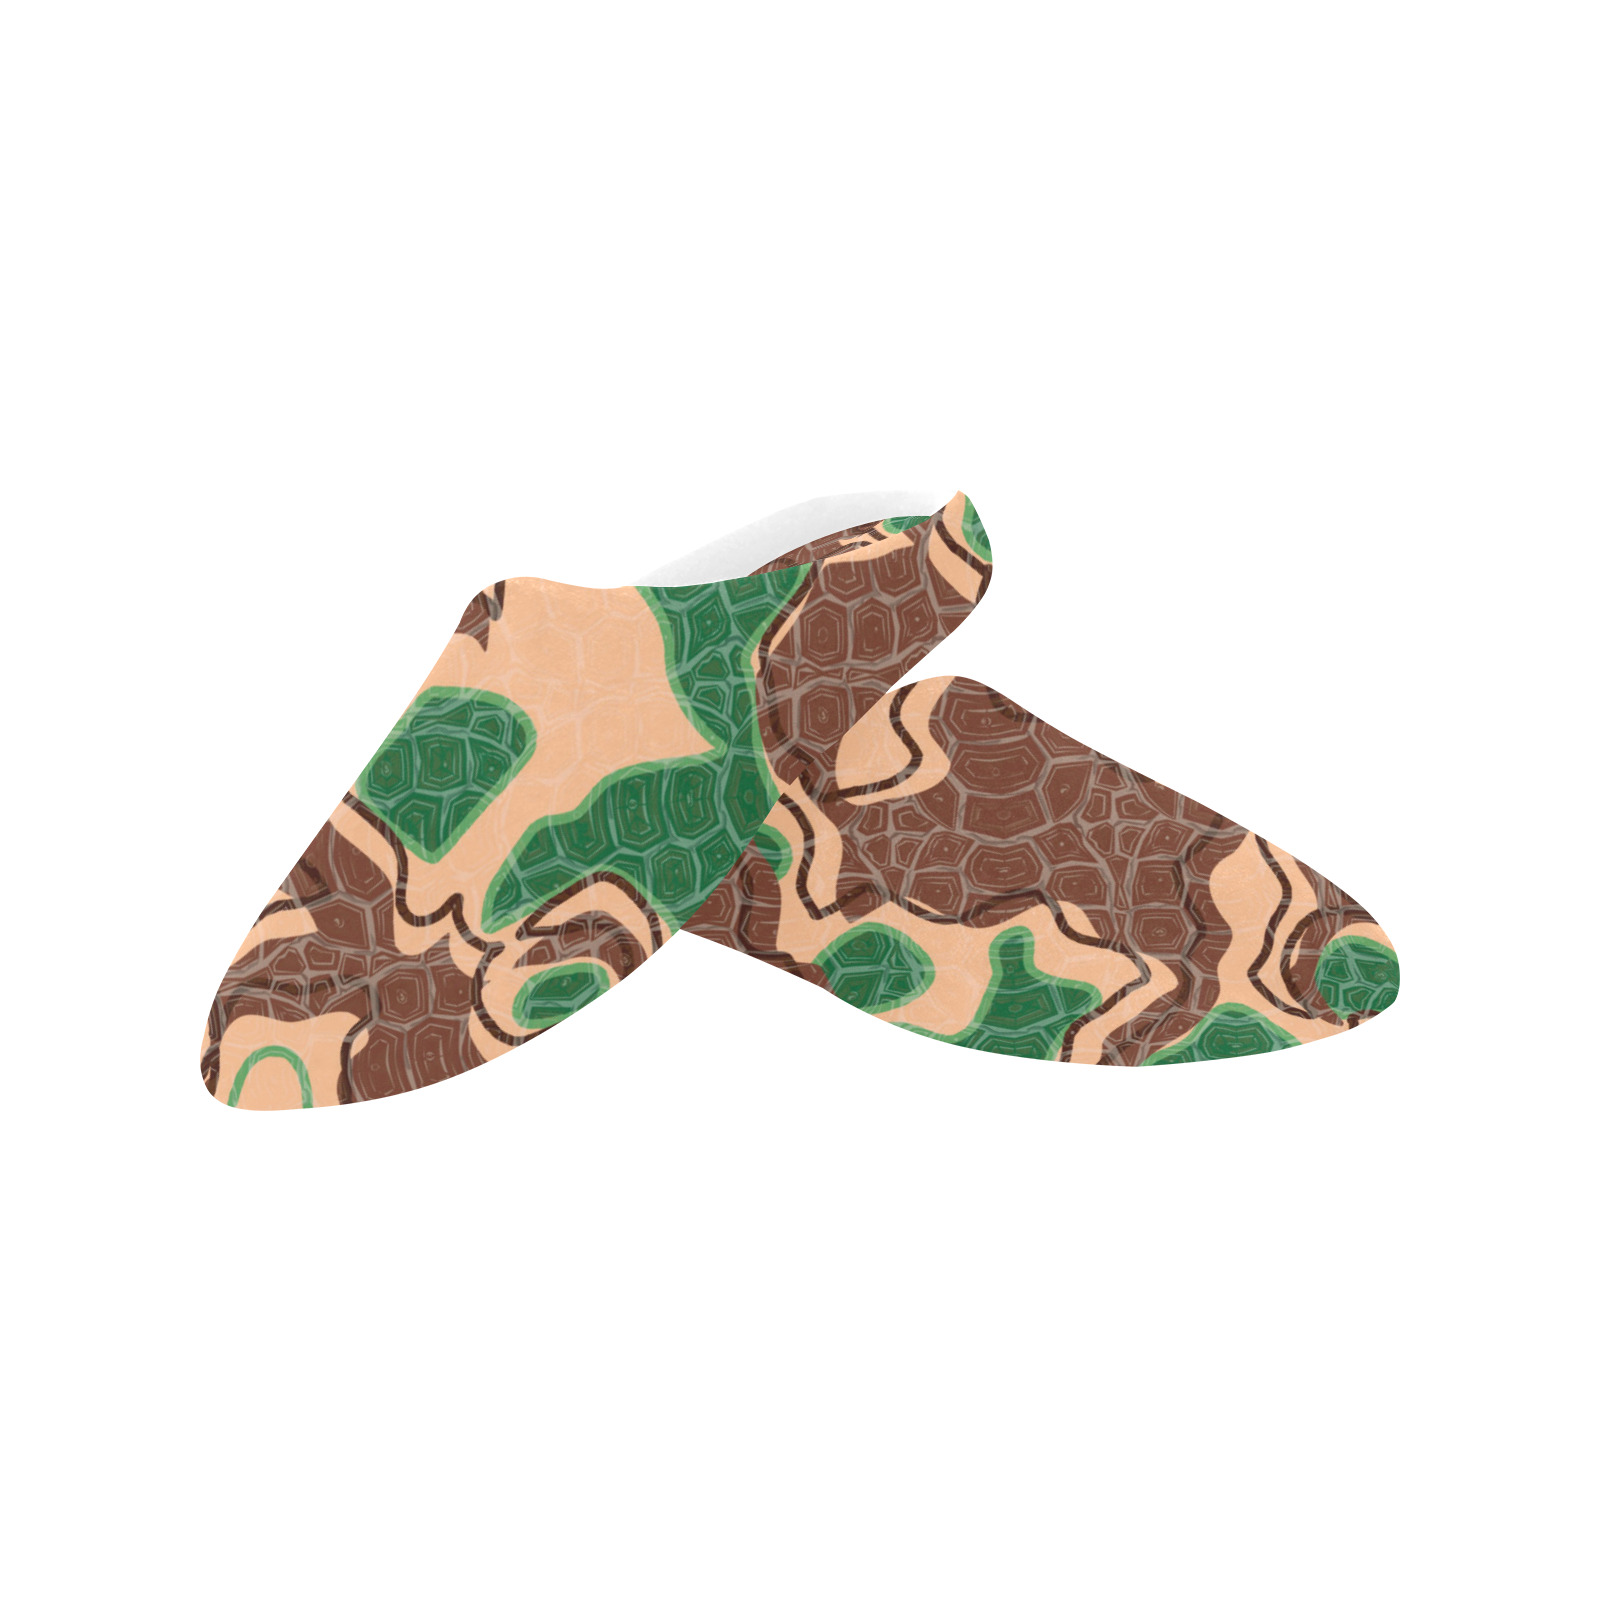 Modern Fashion Military Turtle Camouflage Women's Non-Slip Cotton Slippers (Model 0602)